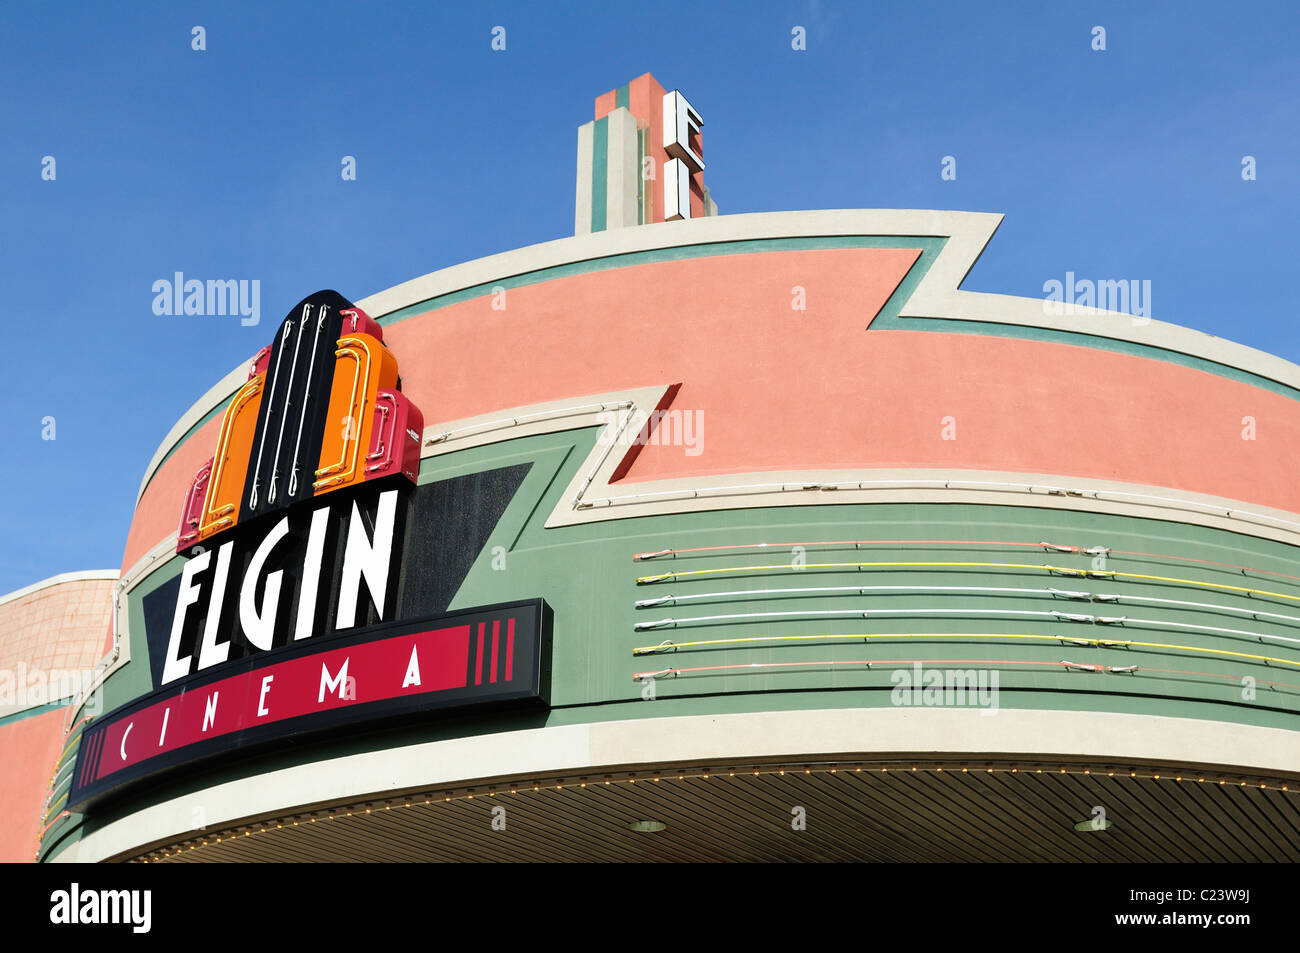 The art deco Elgin Cinema movie theatre. Elgin, Illinois. Stock Photo